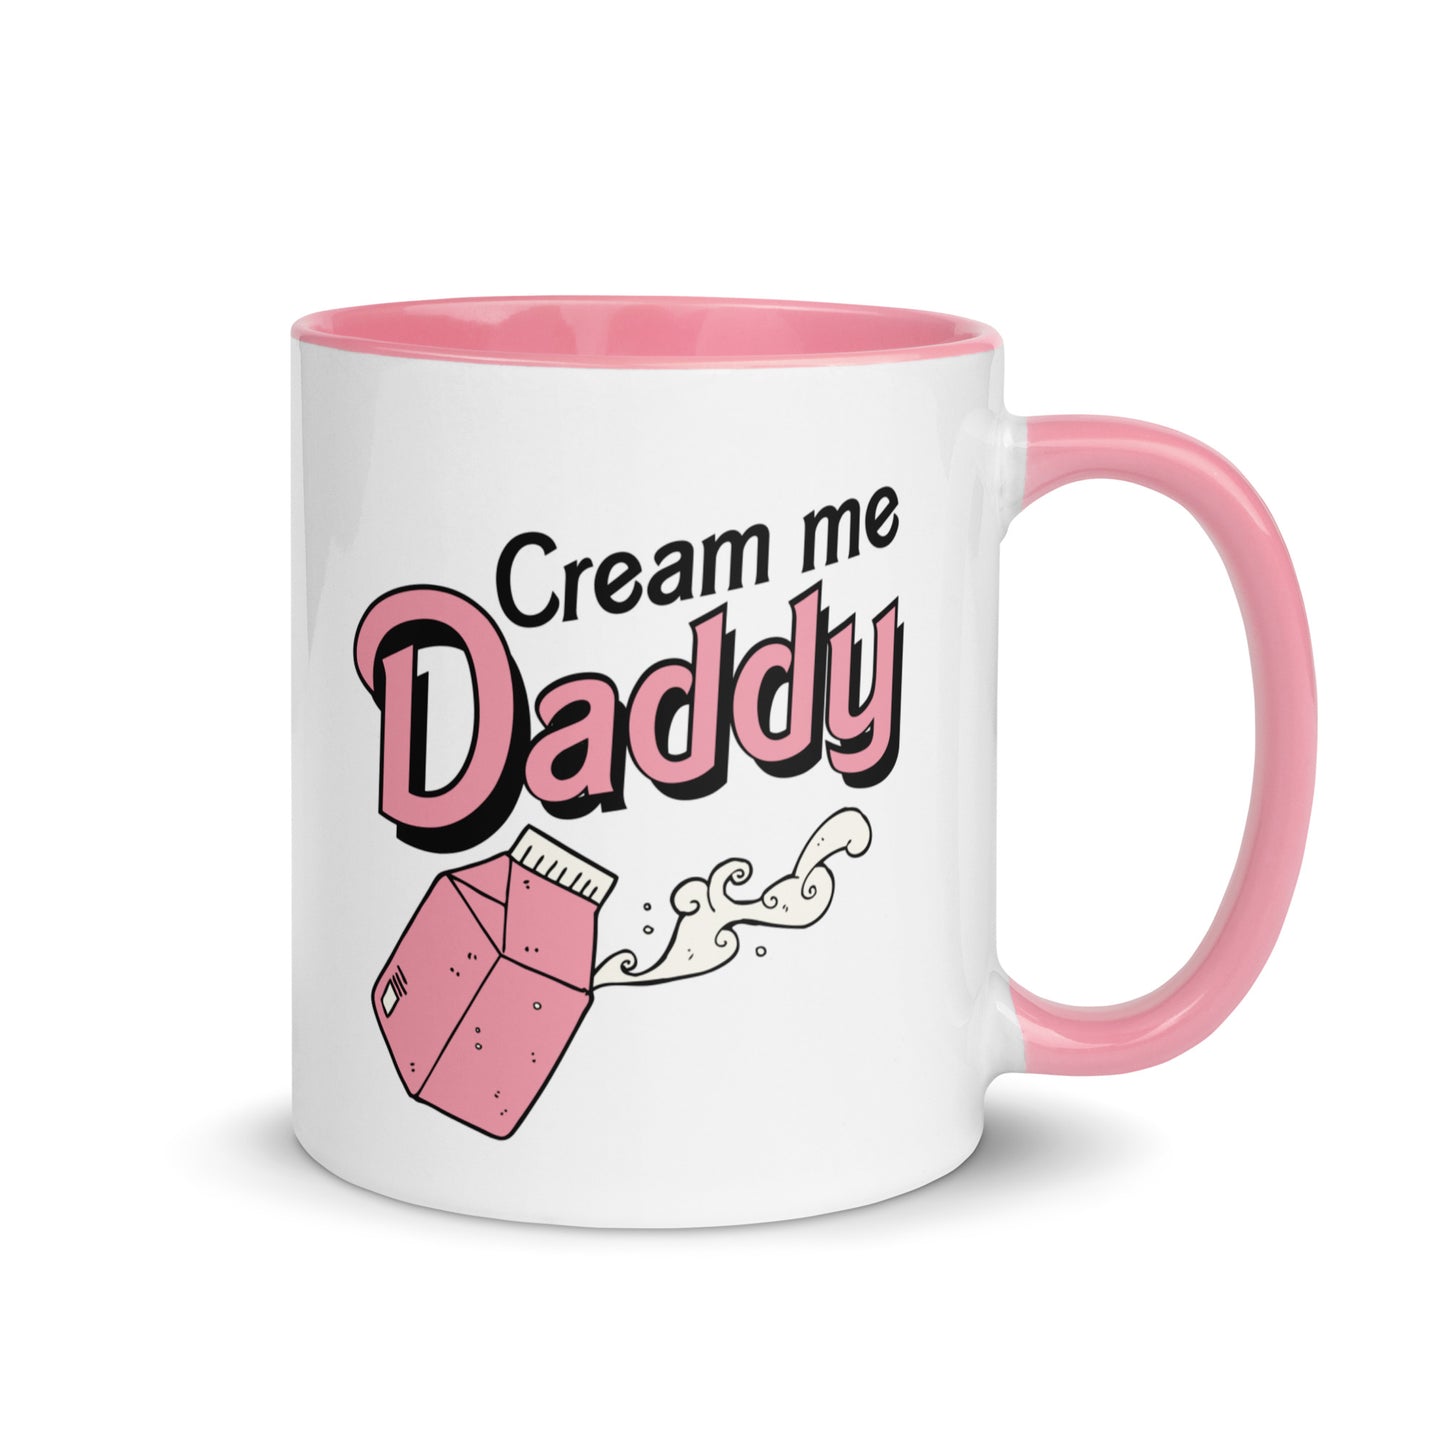 Cream me, Daddy Mug colorful